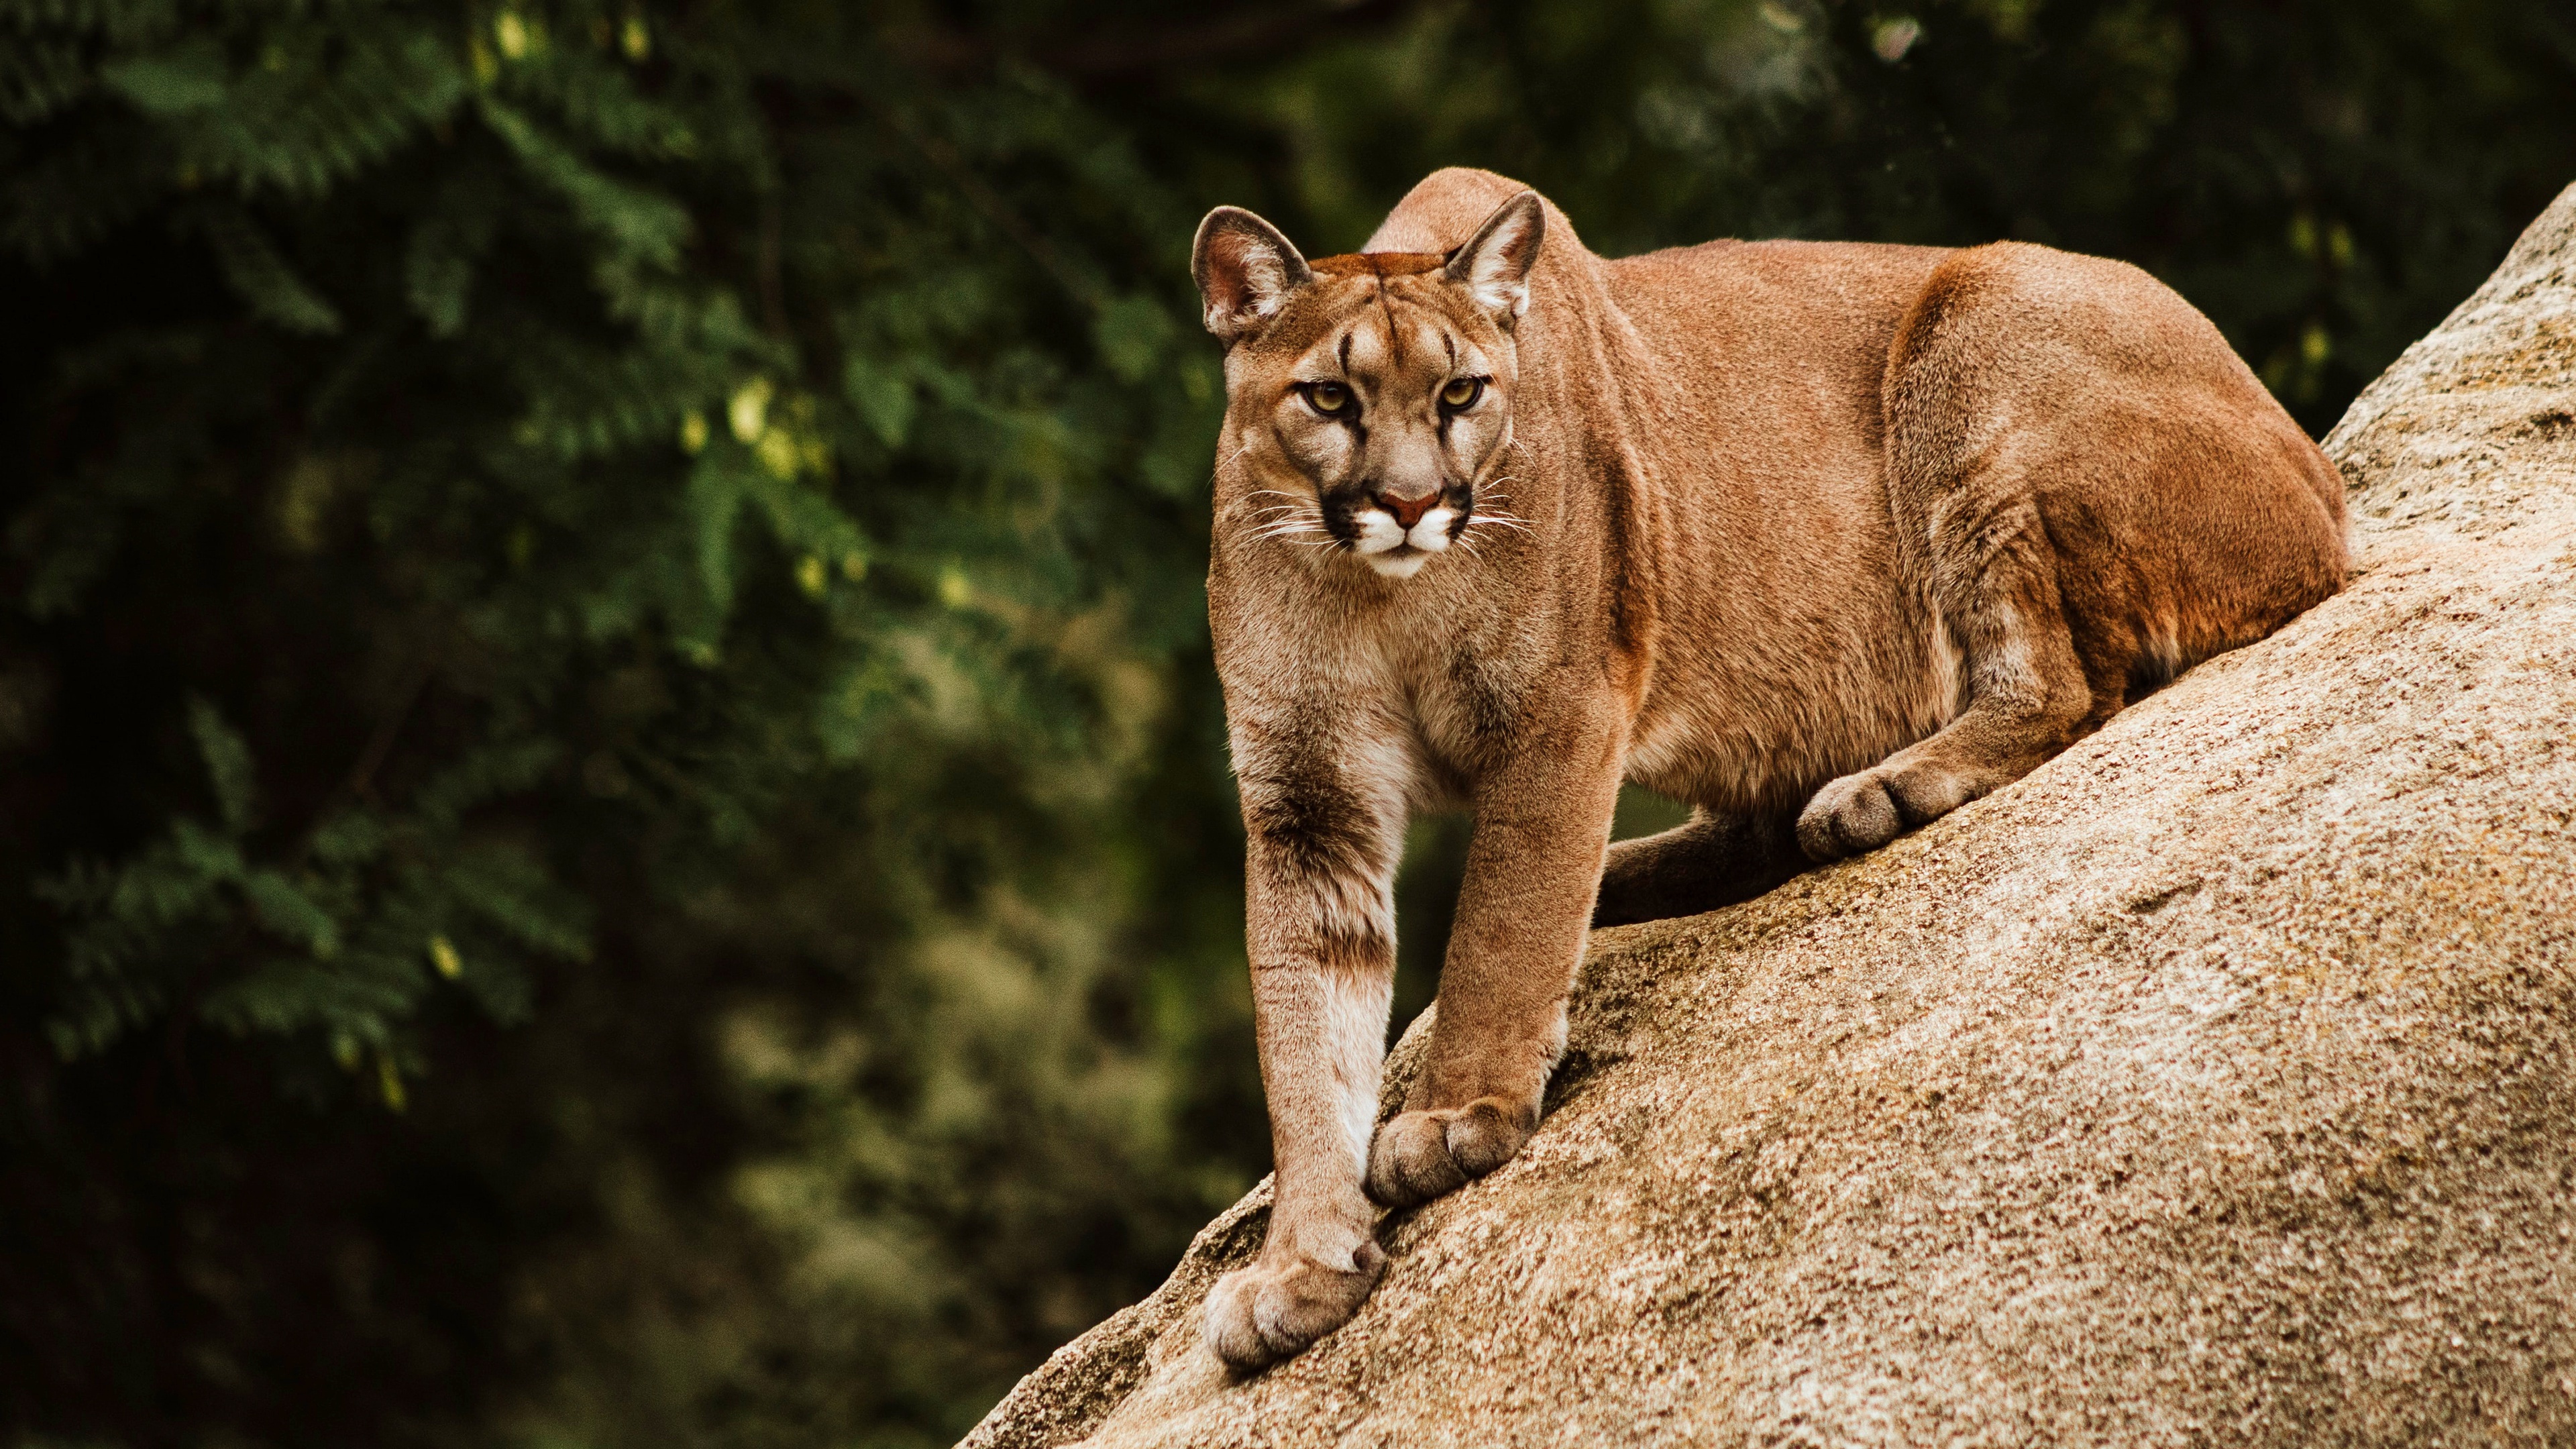 Cougar, 4K ultra wallpaper, Wildlife photography, Untouched wilderness, 3840x2160 4K Desktop